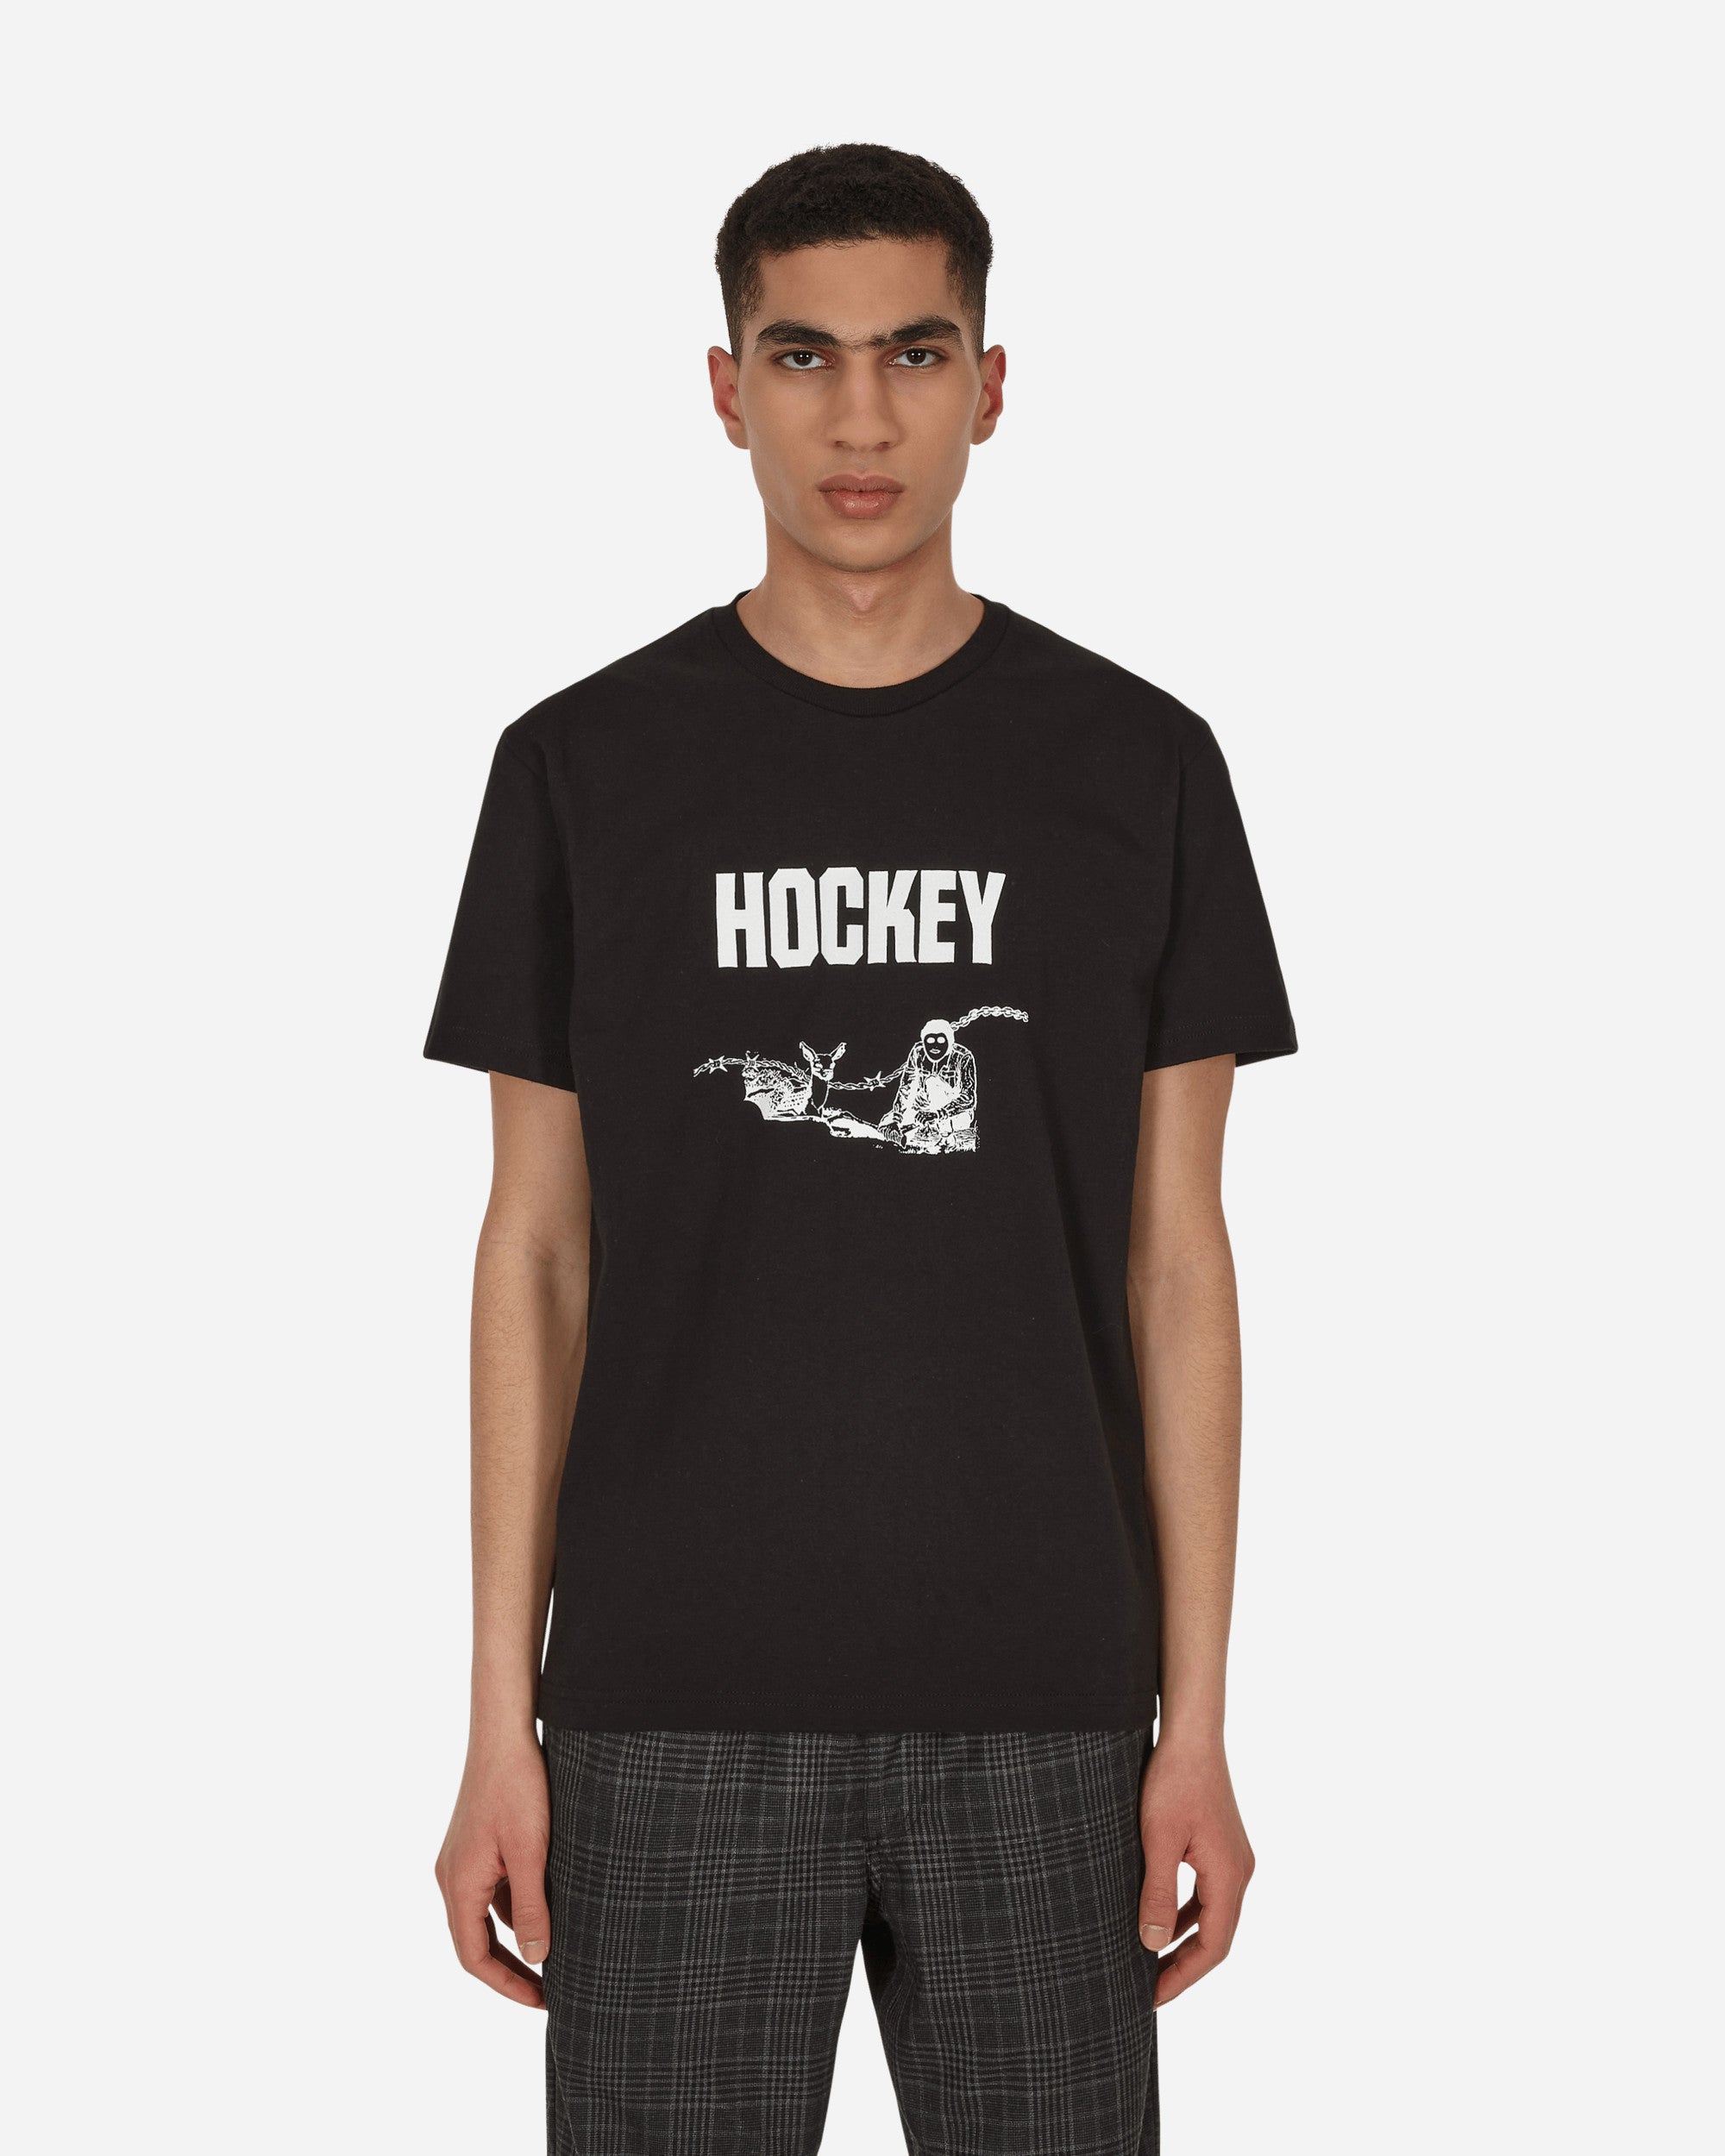 Hockey T-Shirt